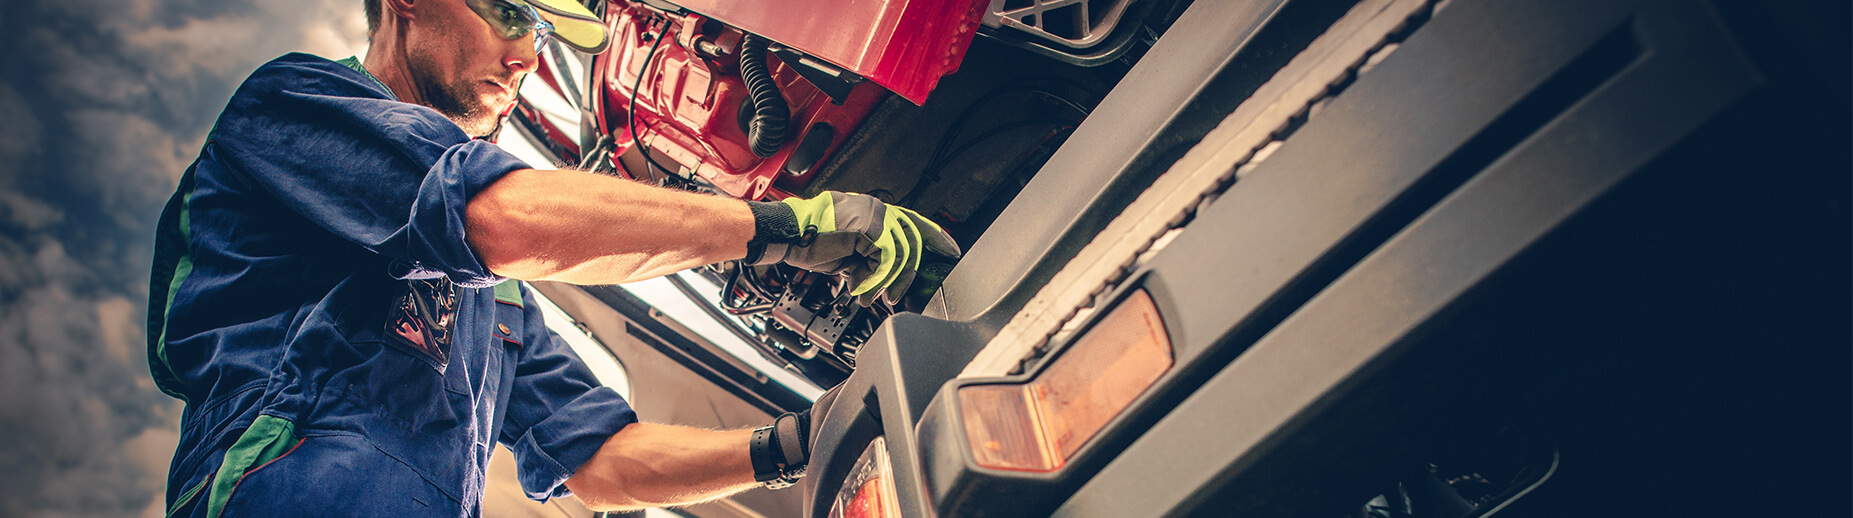 Cincinnati Auto Repair, Auto Mechanic and Truck Repair